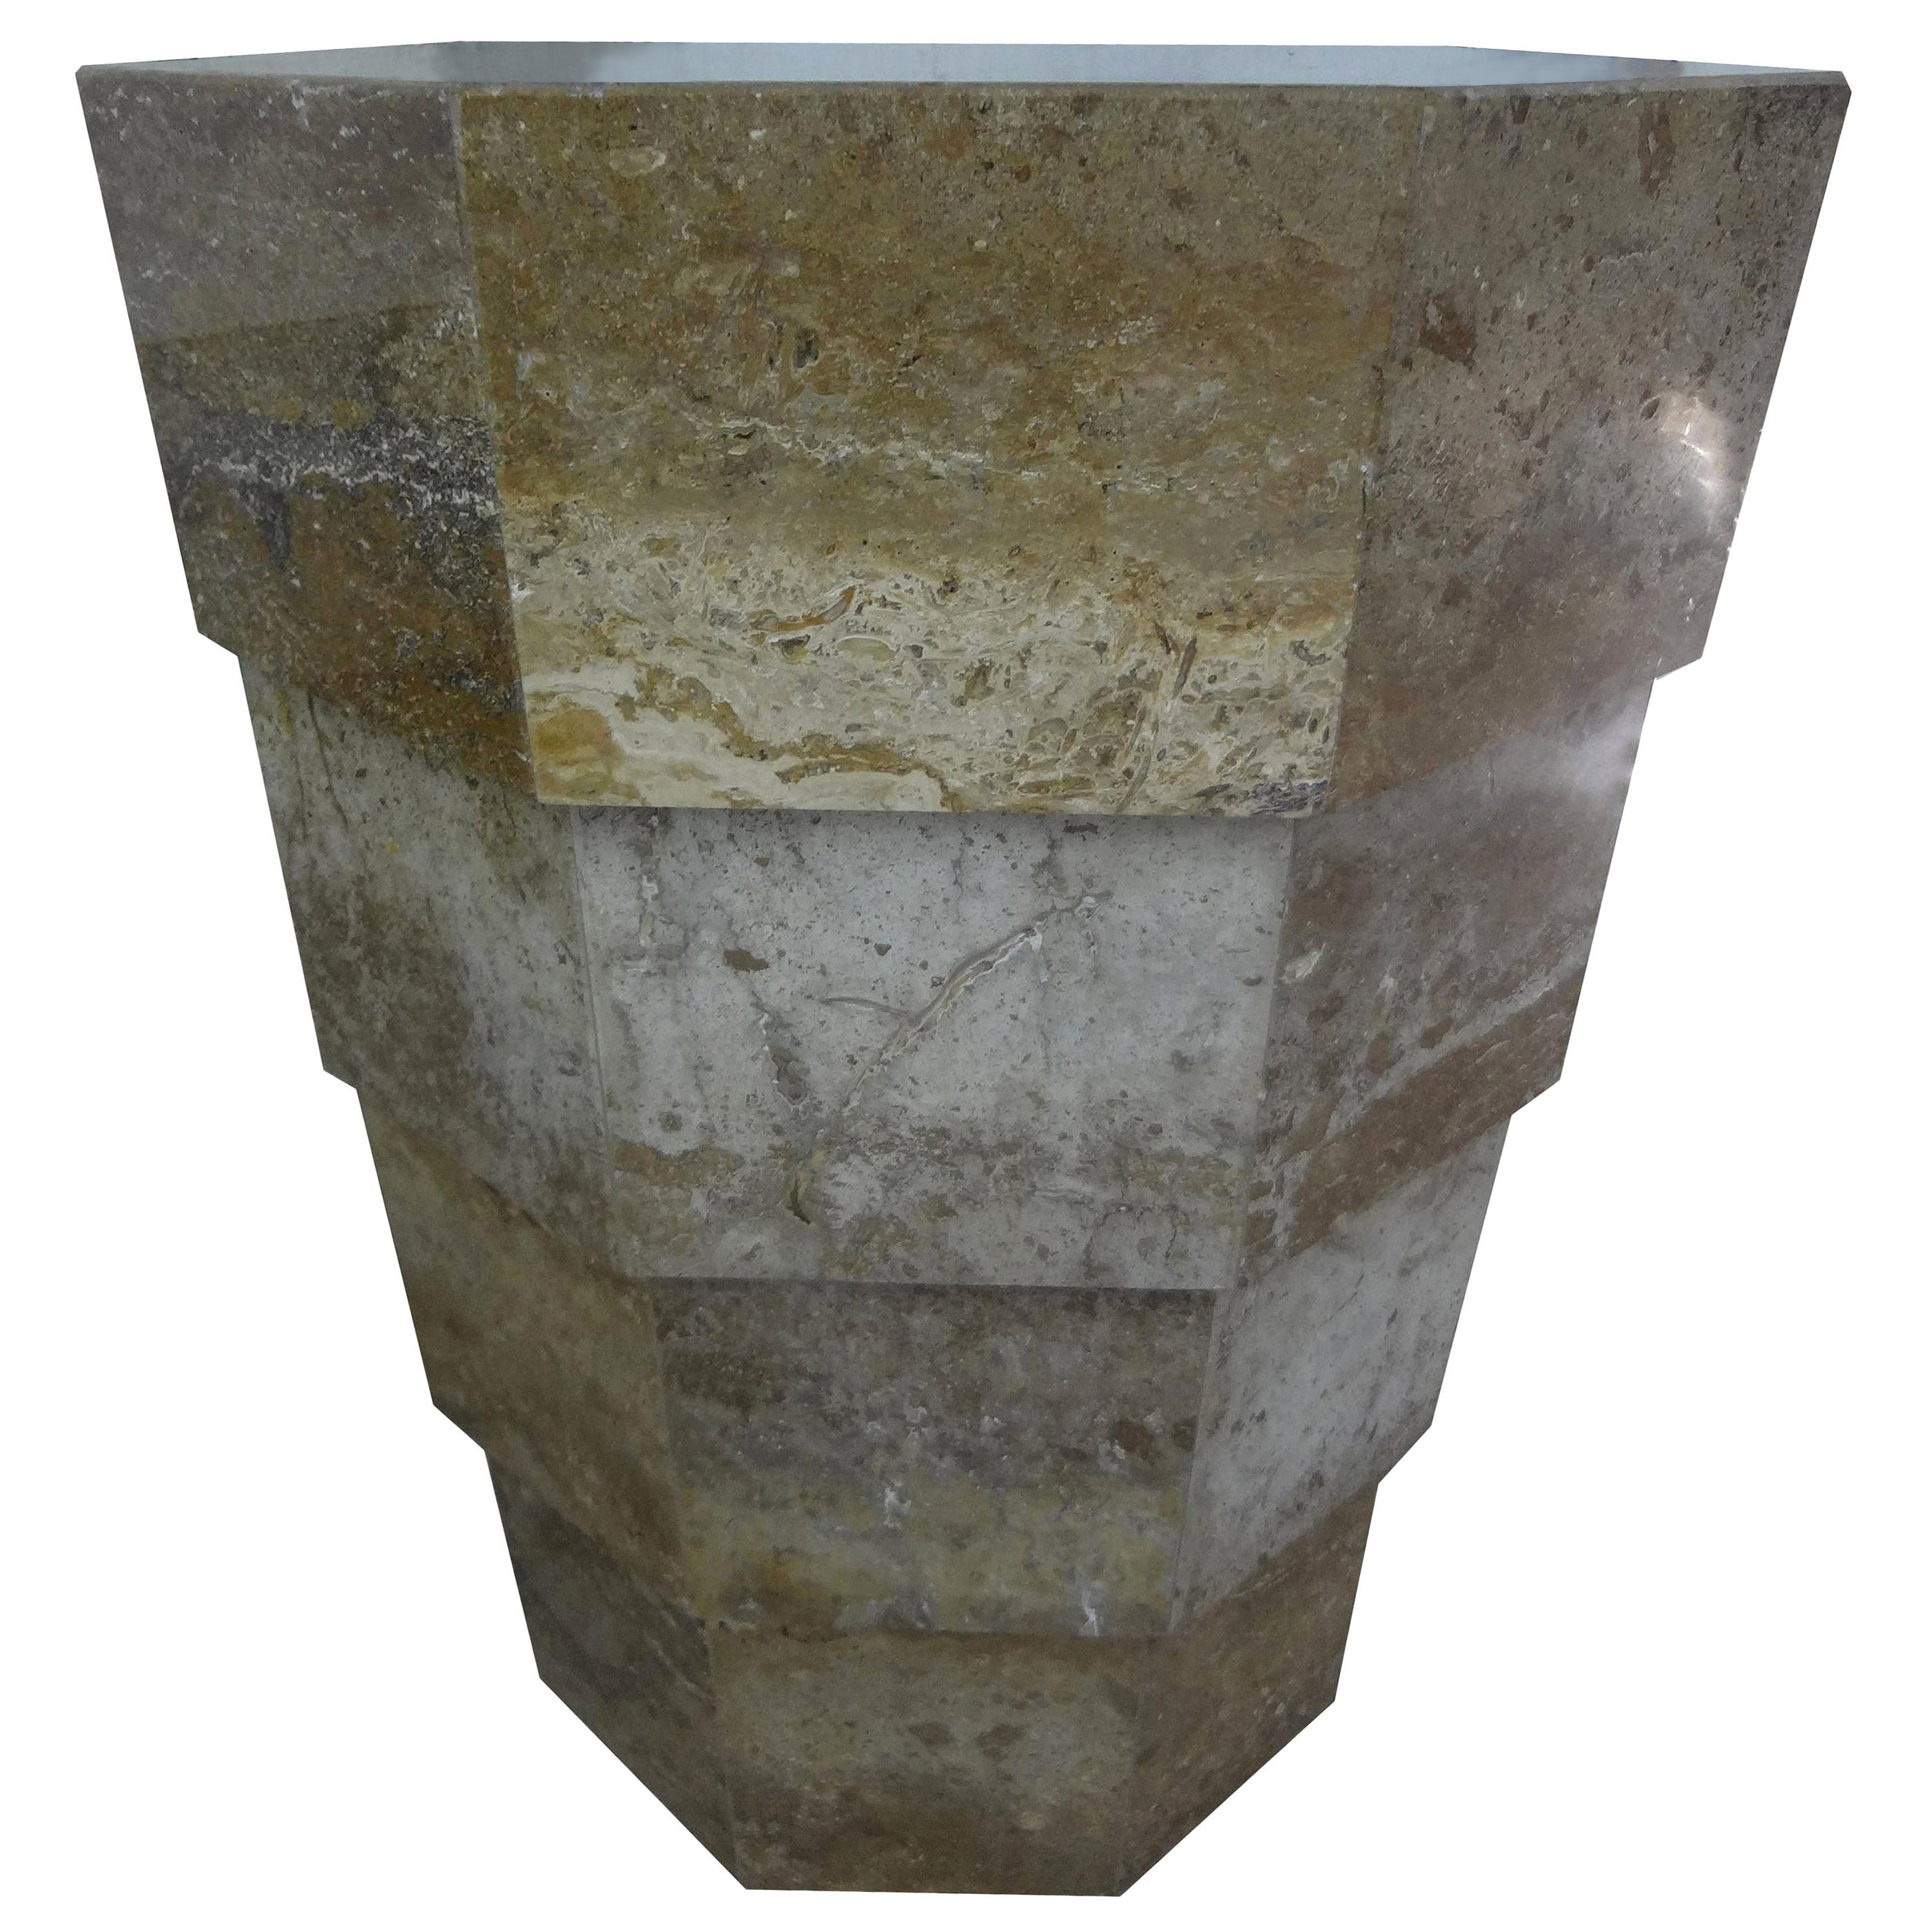 Mesa-pedestal italiana moderna de travertino escalonado según Angelo Mangiarotti